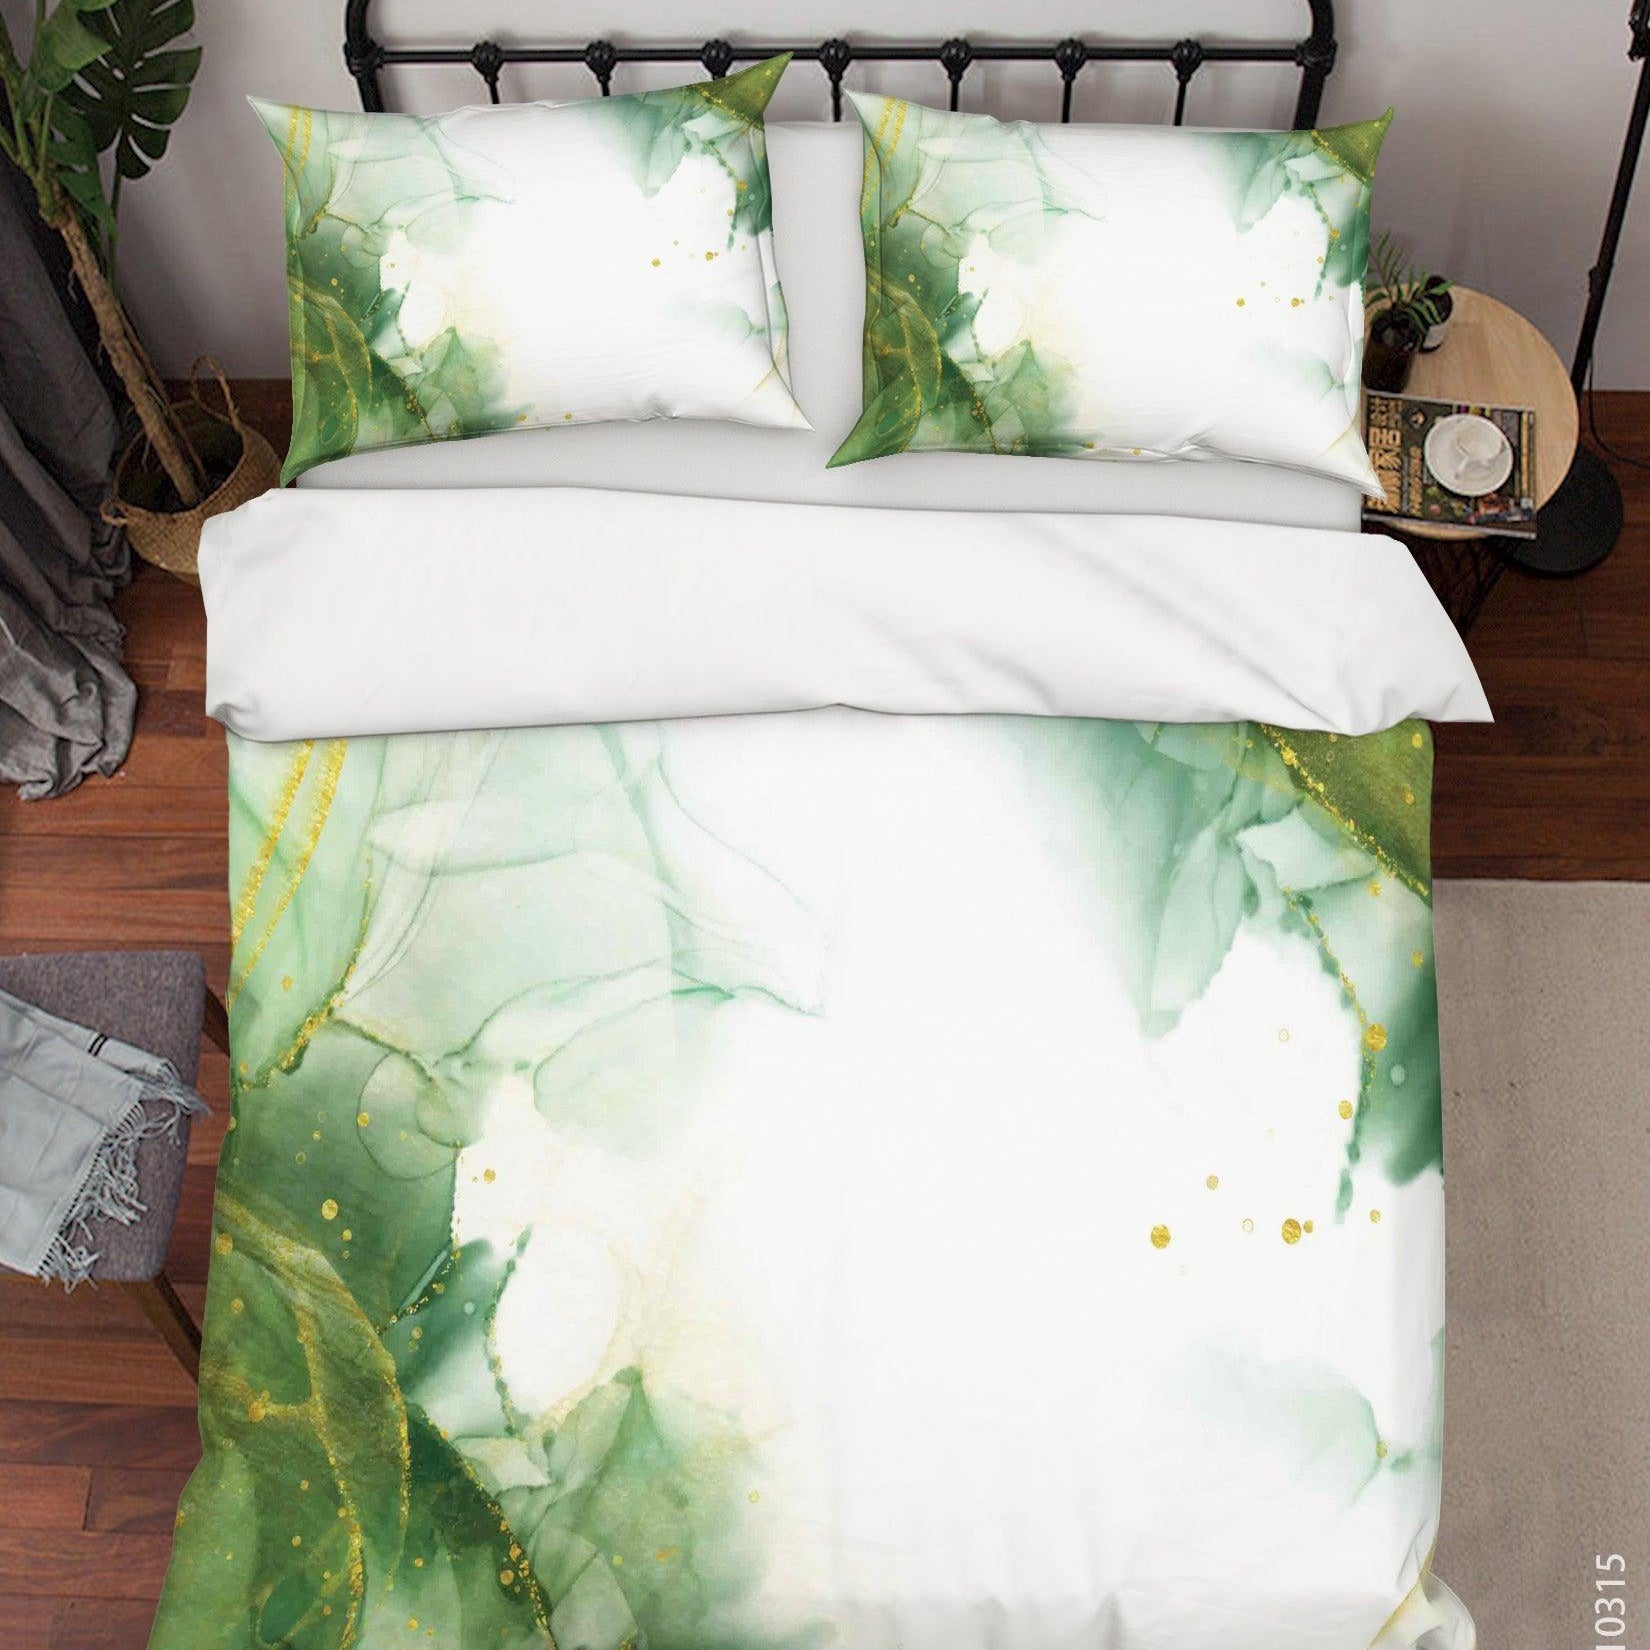 3D Watercolor Green Marble Quilt Cover Set Bedding Set Duvet Cover Pillowcases 87- Jess Art Decoration